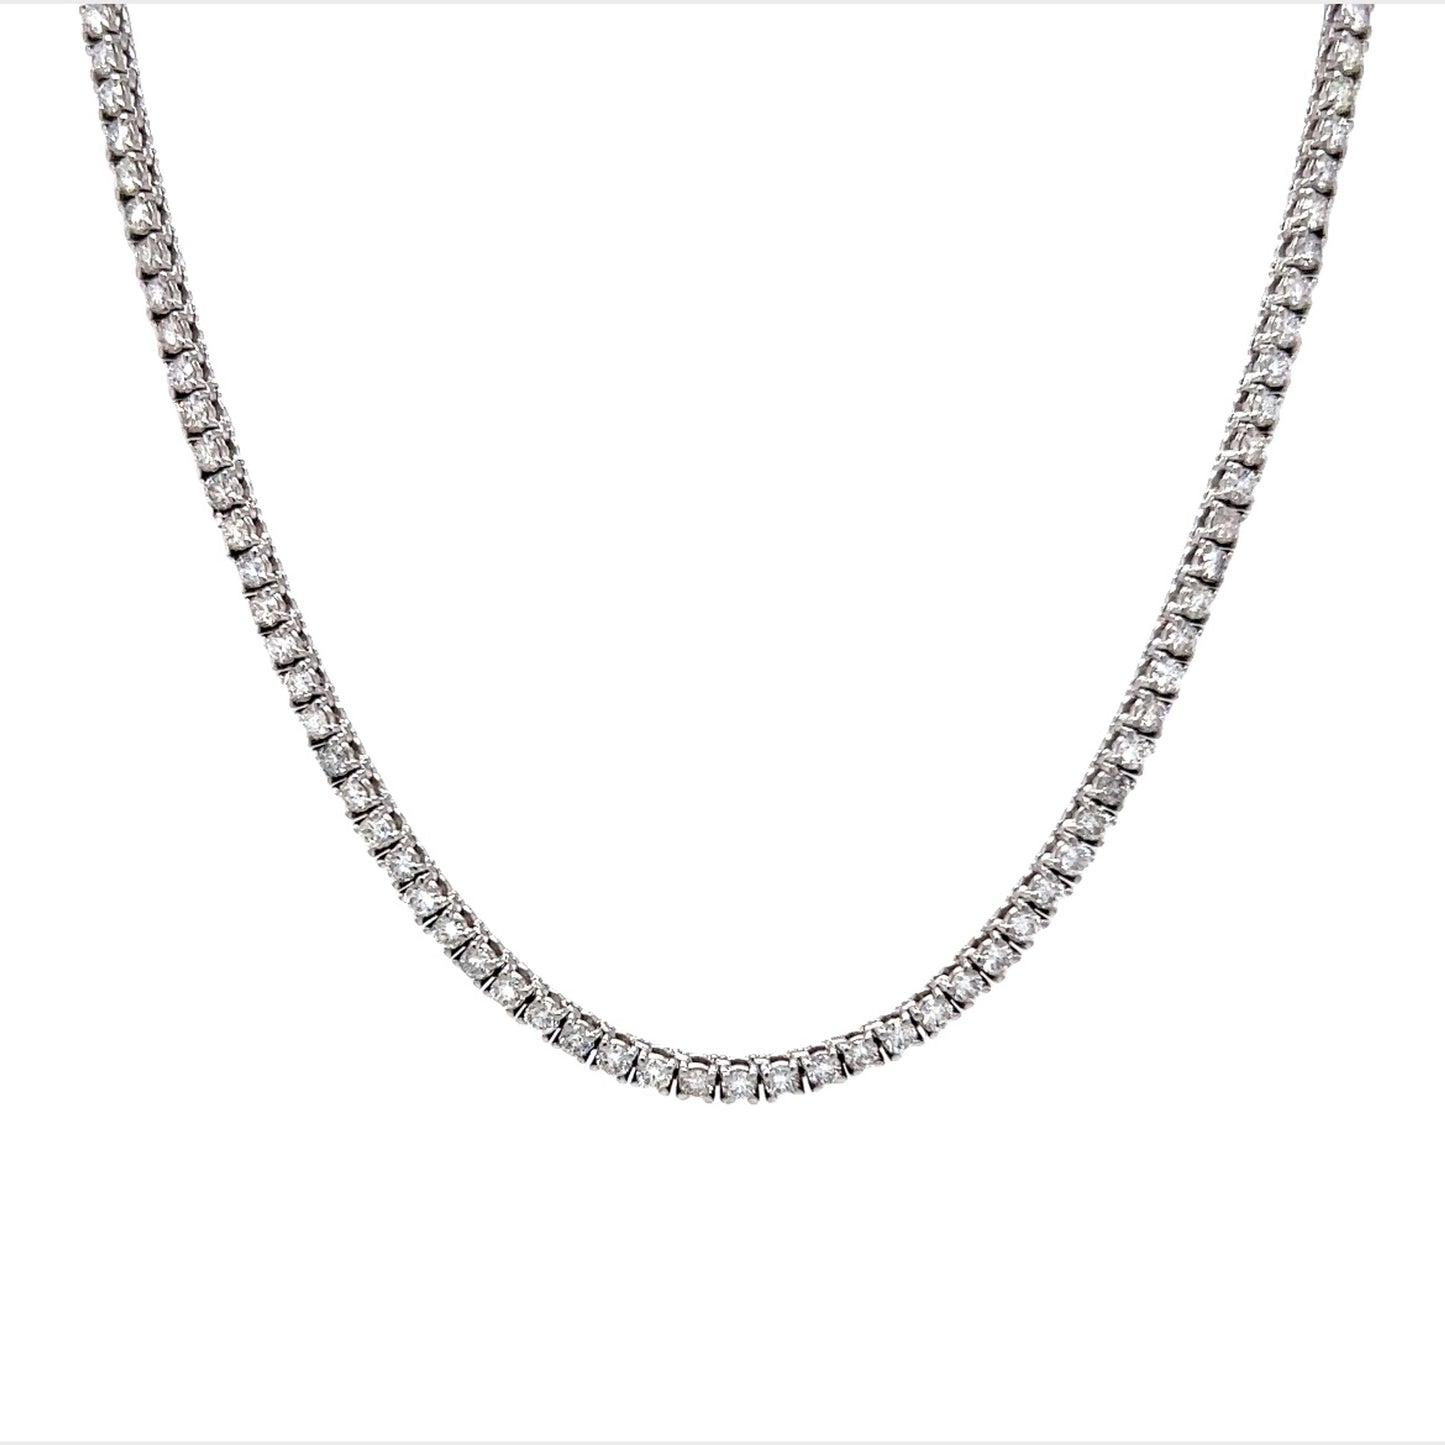 6.05 Carat Diamond Tennis Necklace in 18k White Gold